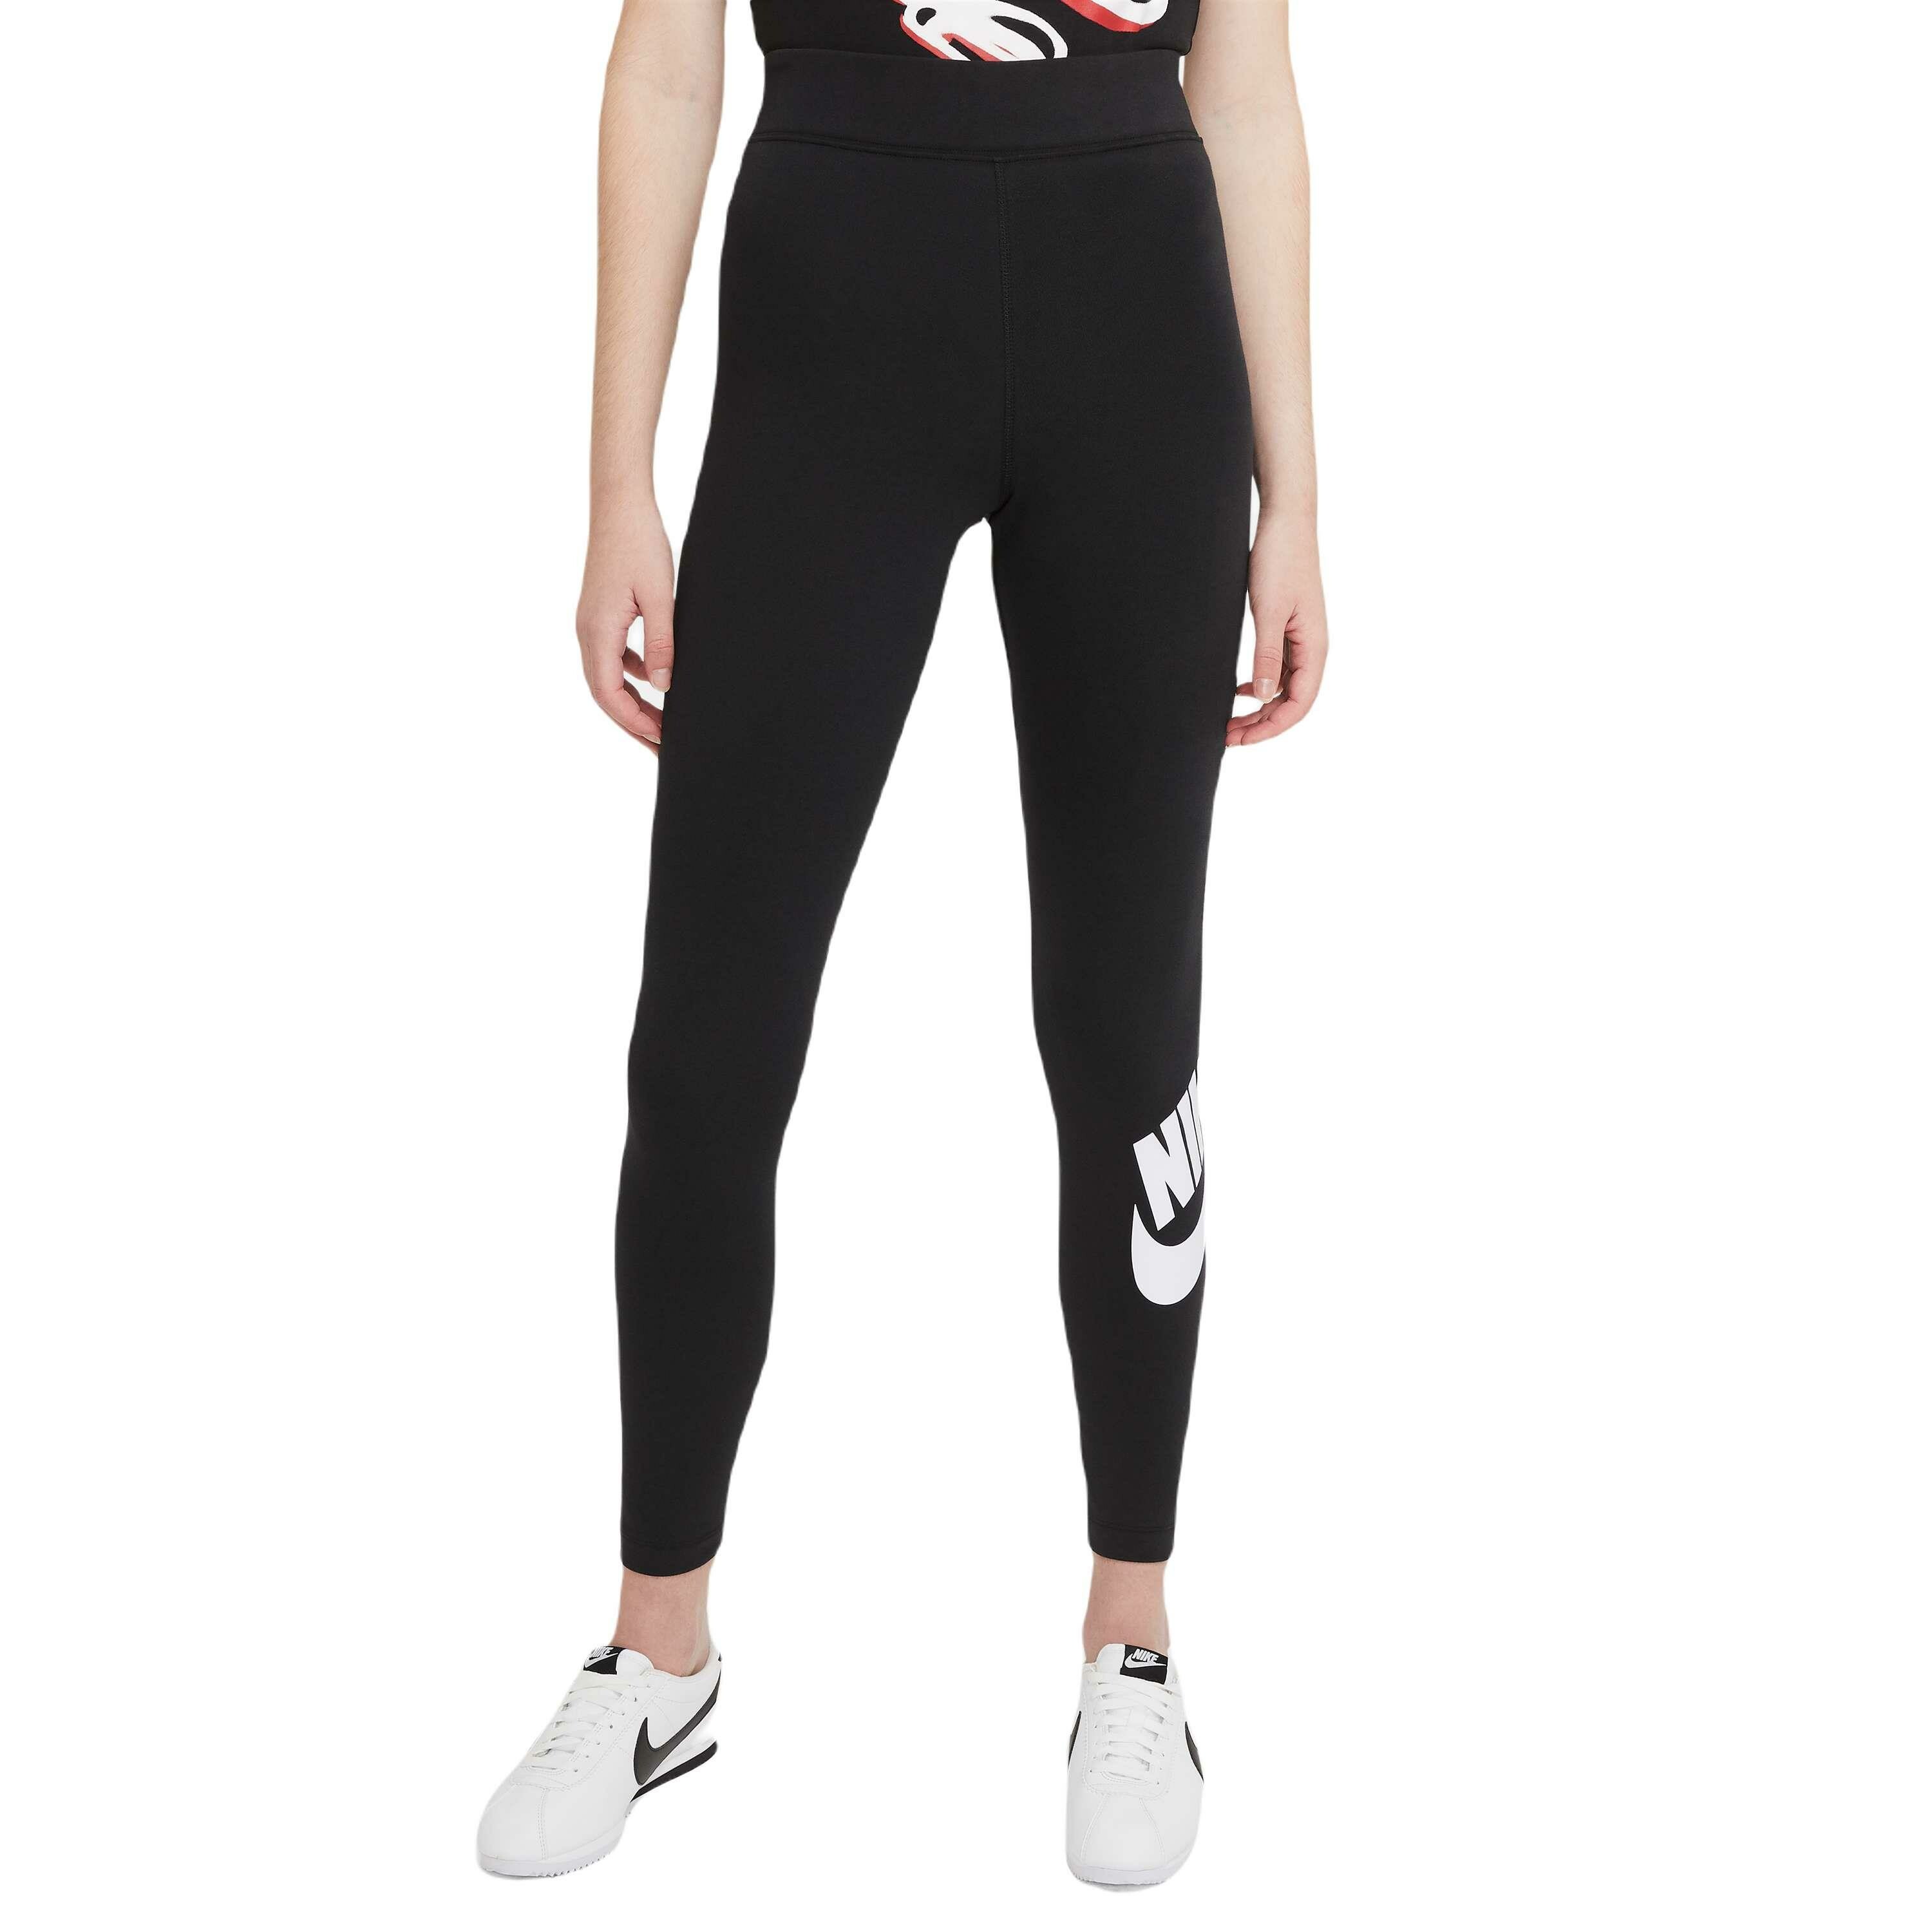 klein afwijzing boog Nike Sportswear Essential sportlegging dames zwart wit